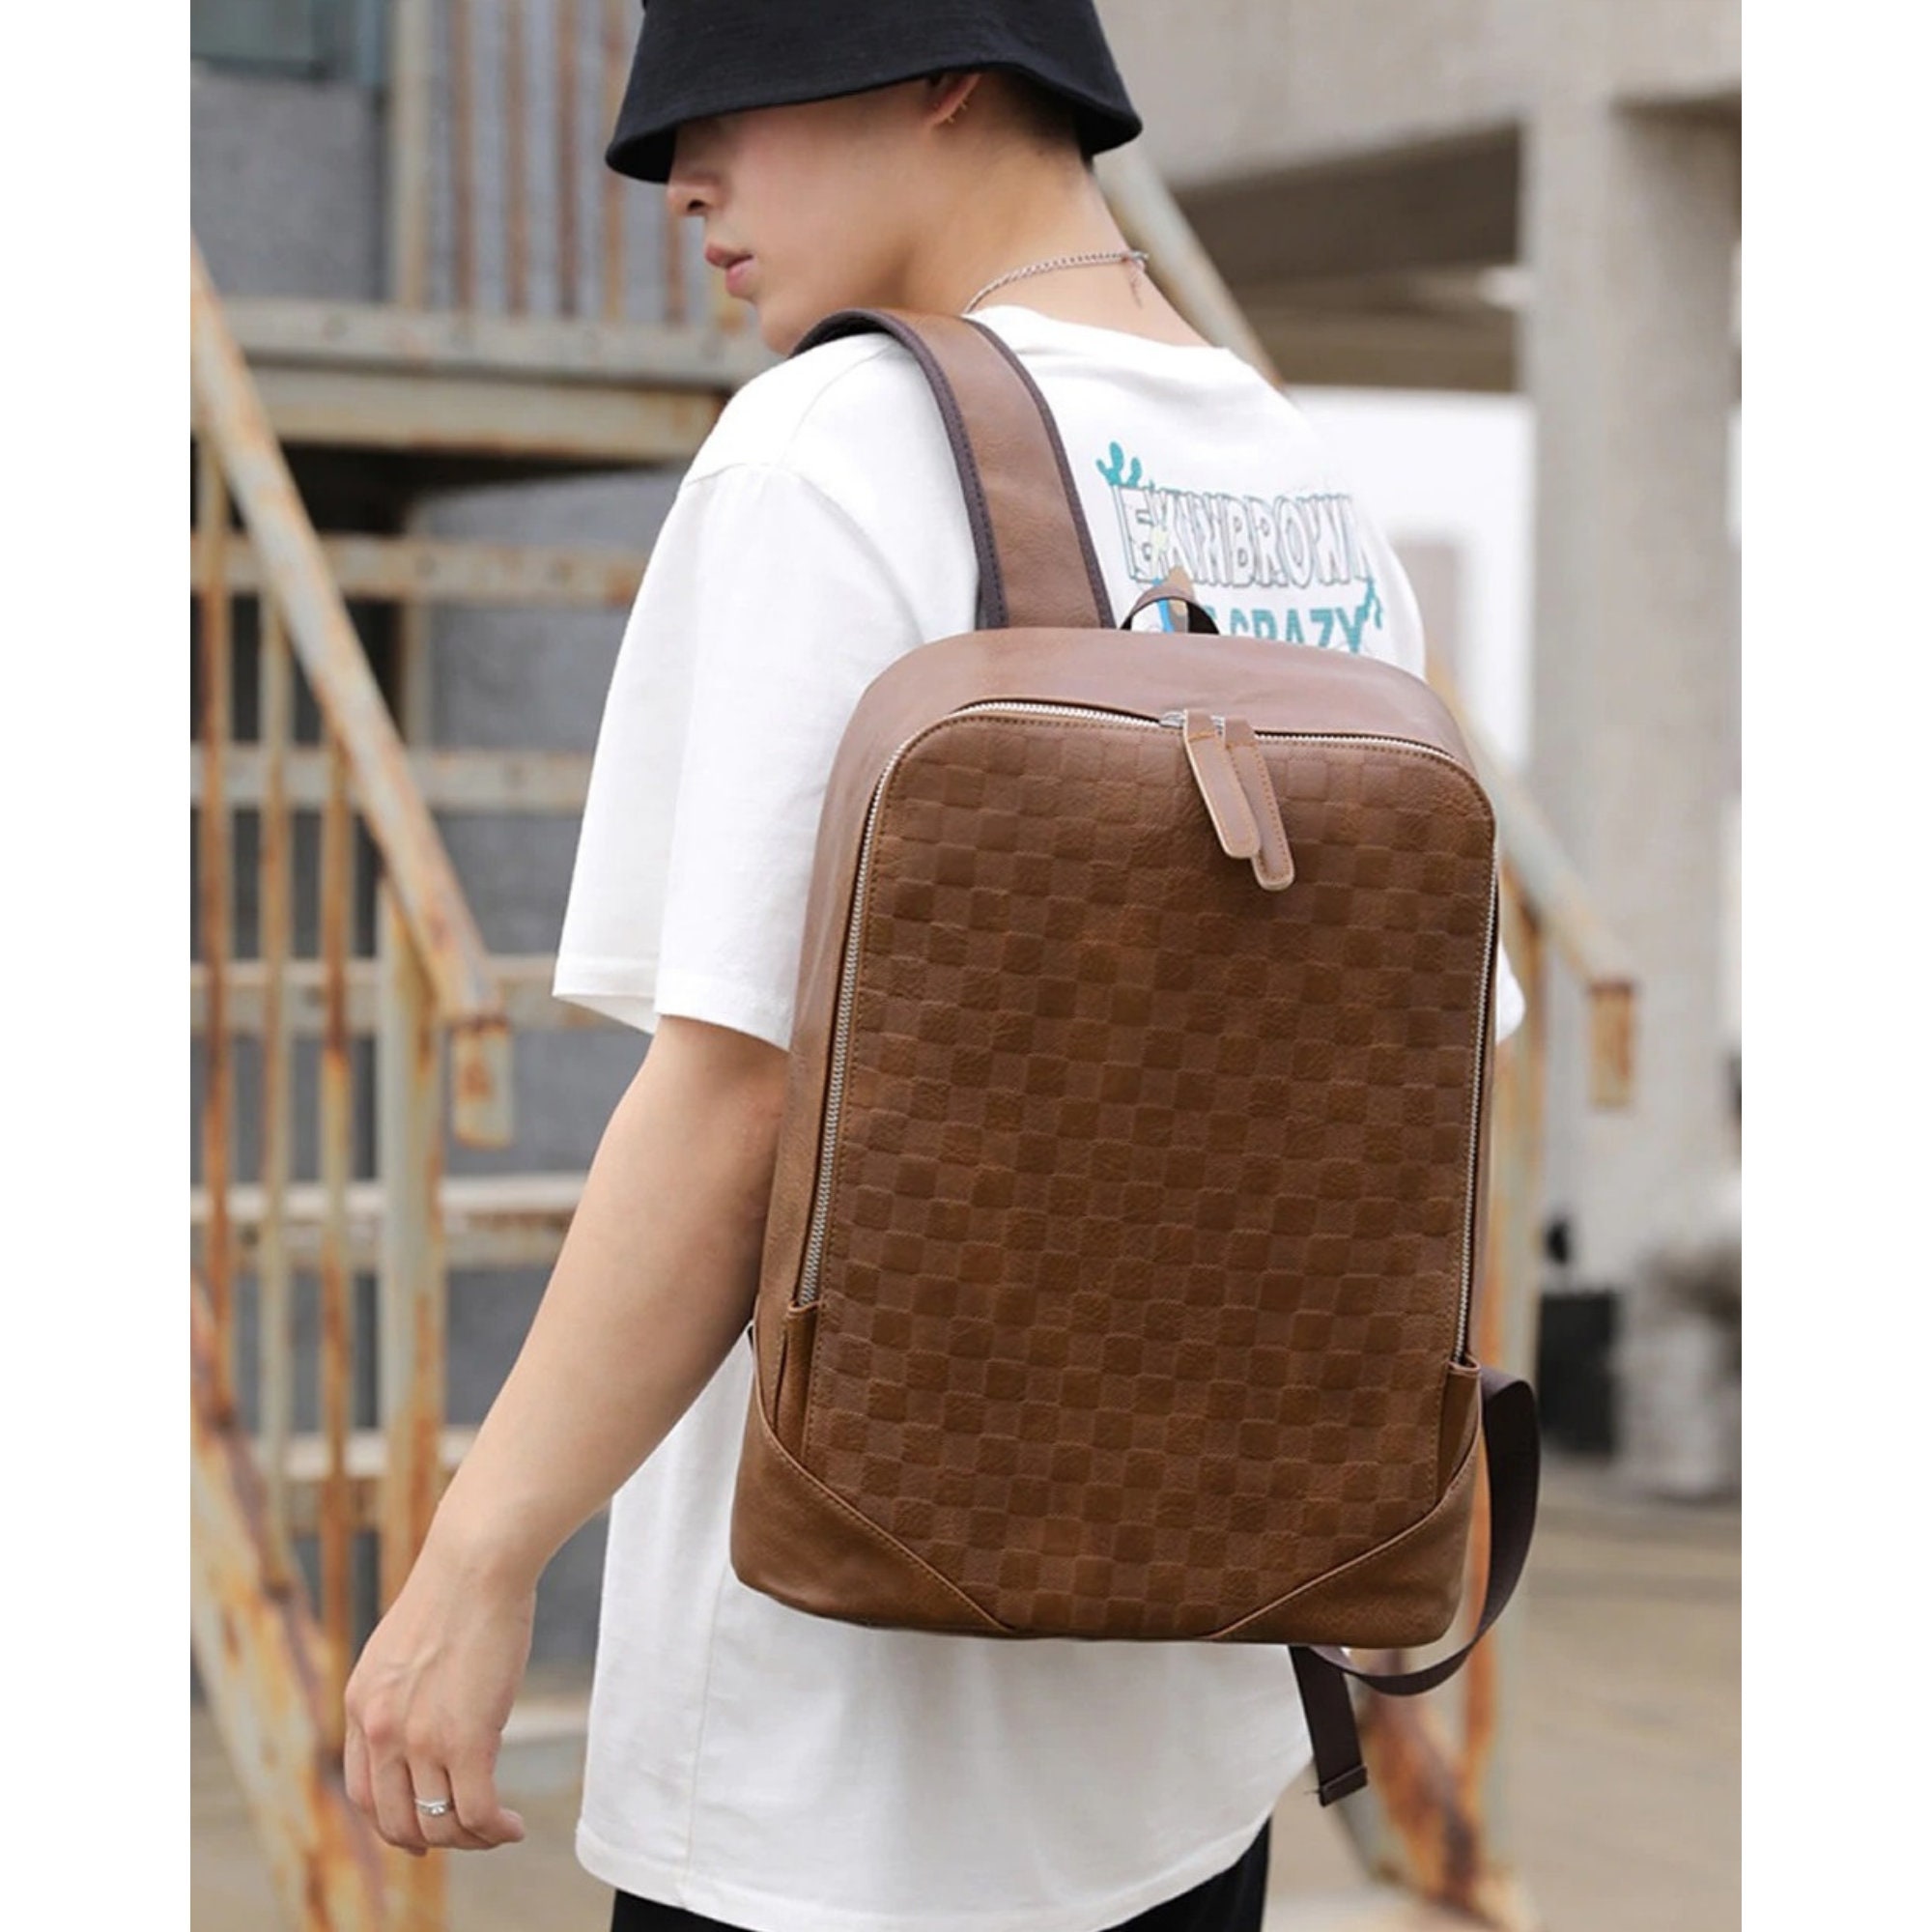 Men Backpack Woven Design Luxury Business Male Laptop Bag 